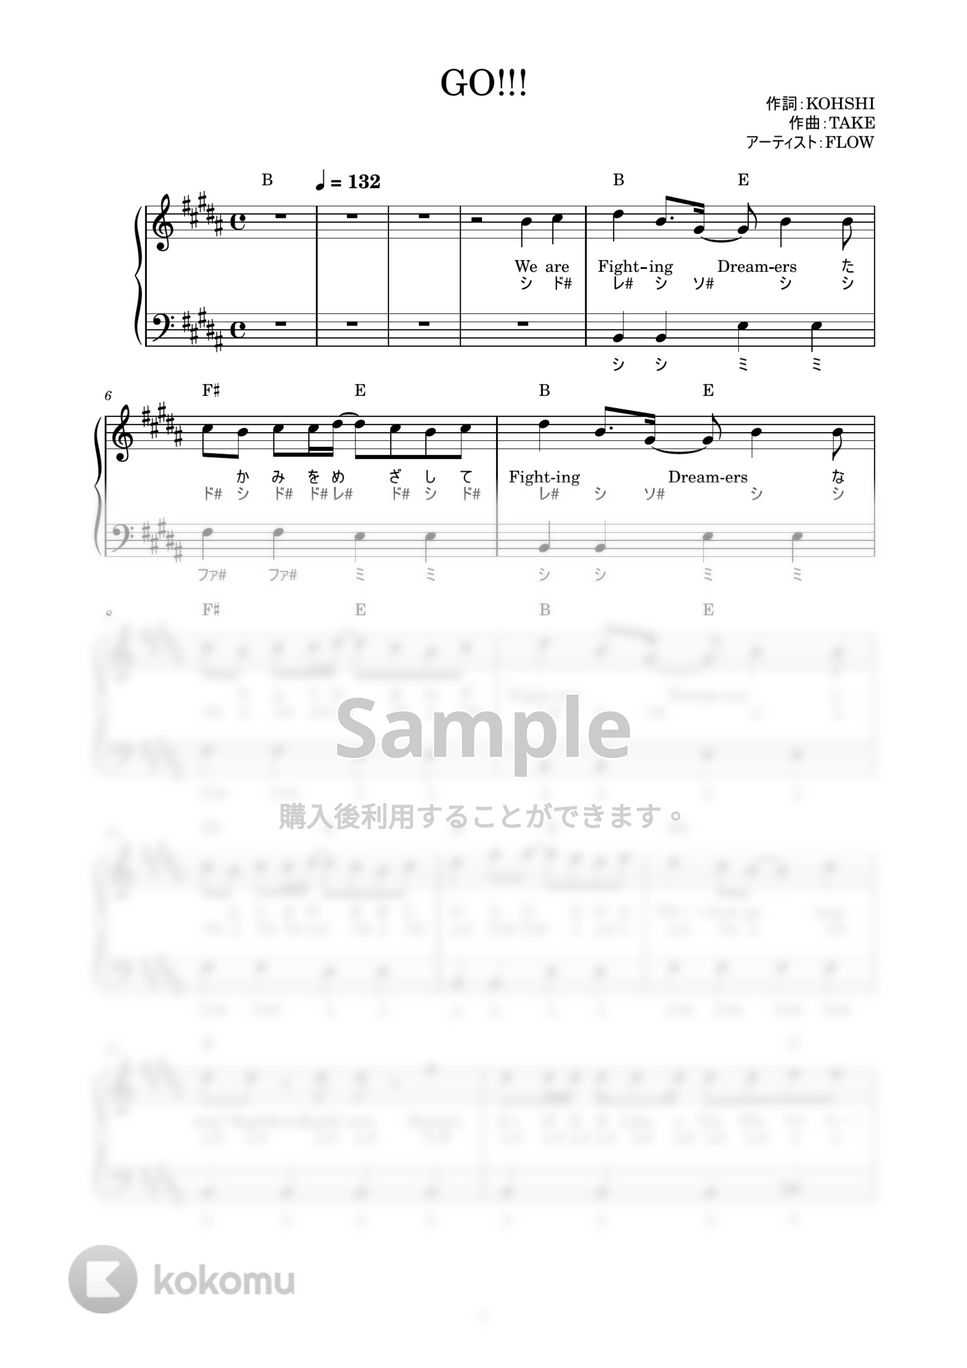 FLOW - GO!!! (かんたん / 歌詞付き / ドレミ付き / 初心者) by piano.tokyo